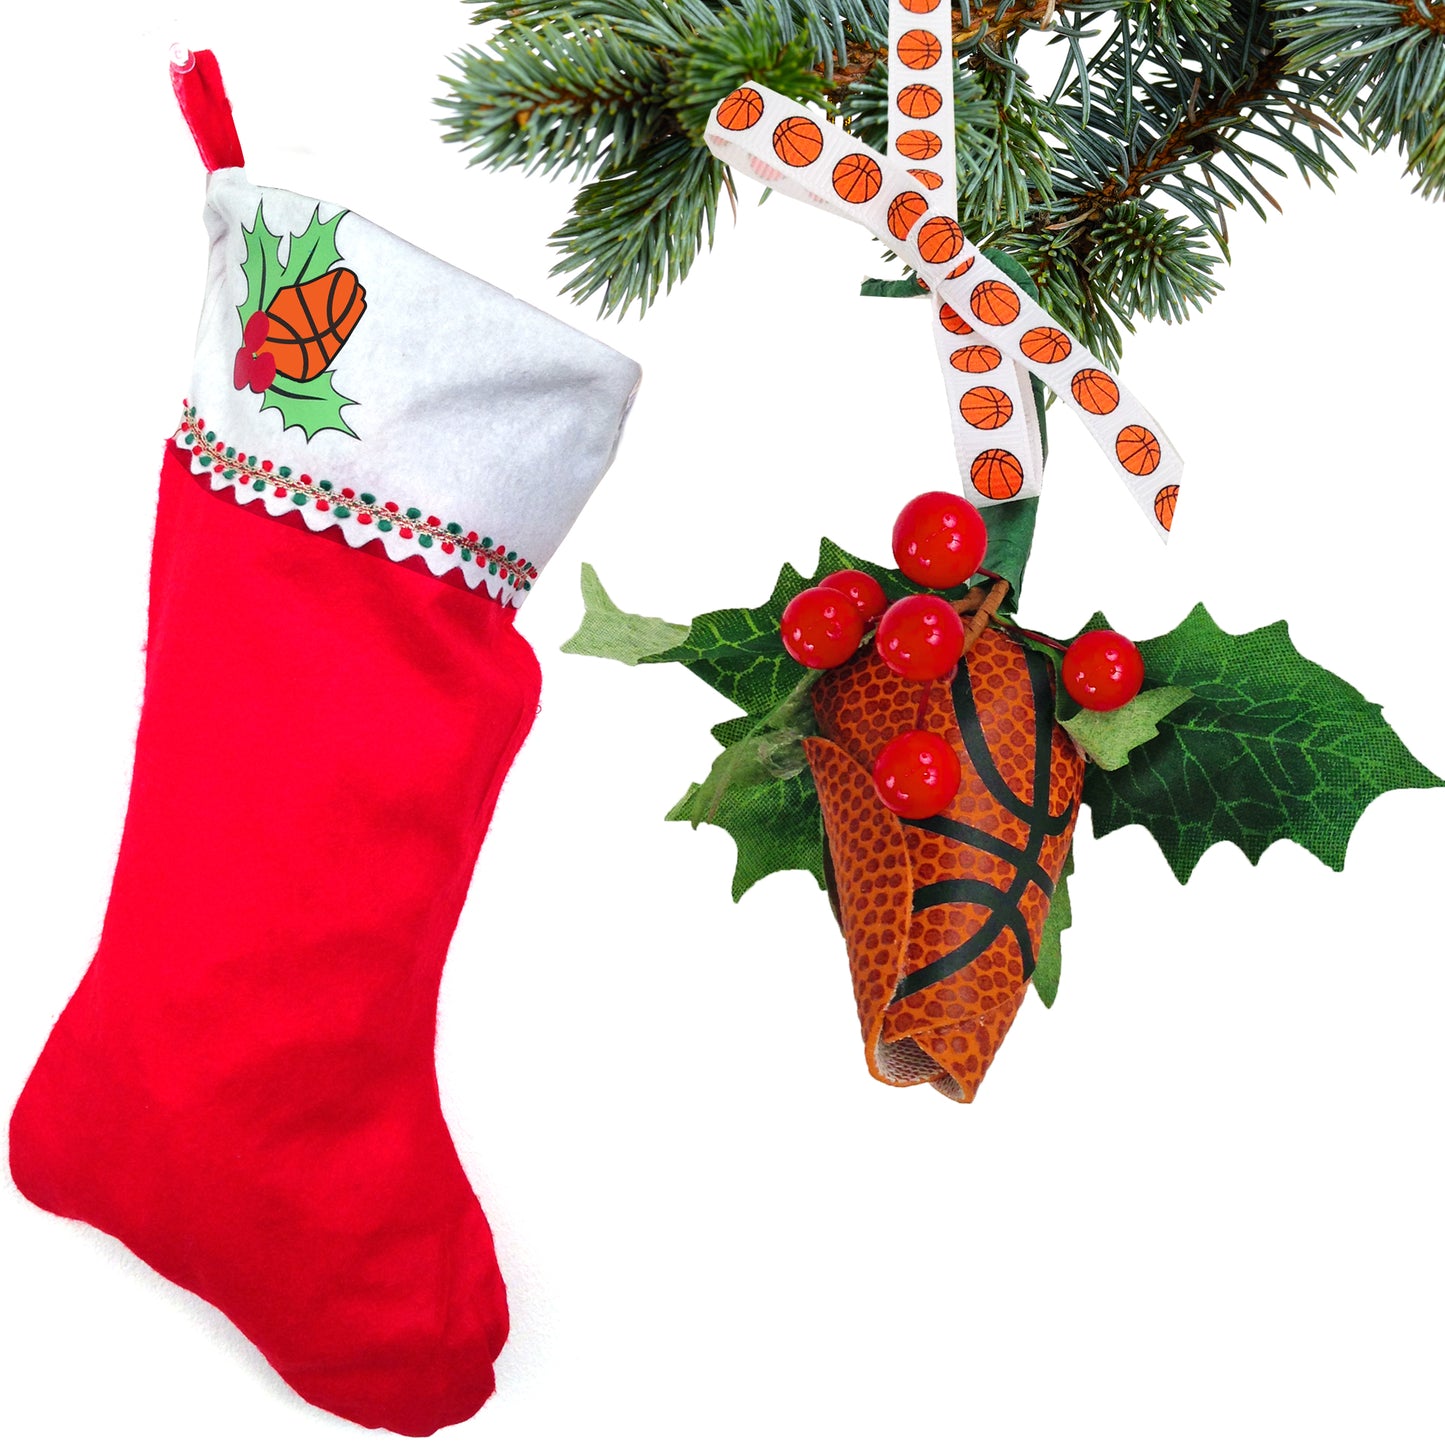 Basketball Rose Christmas Ornament and Stocking Gift Set